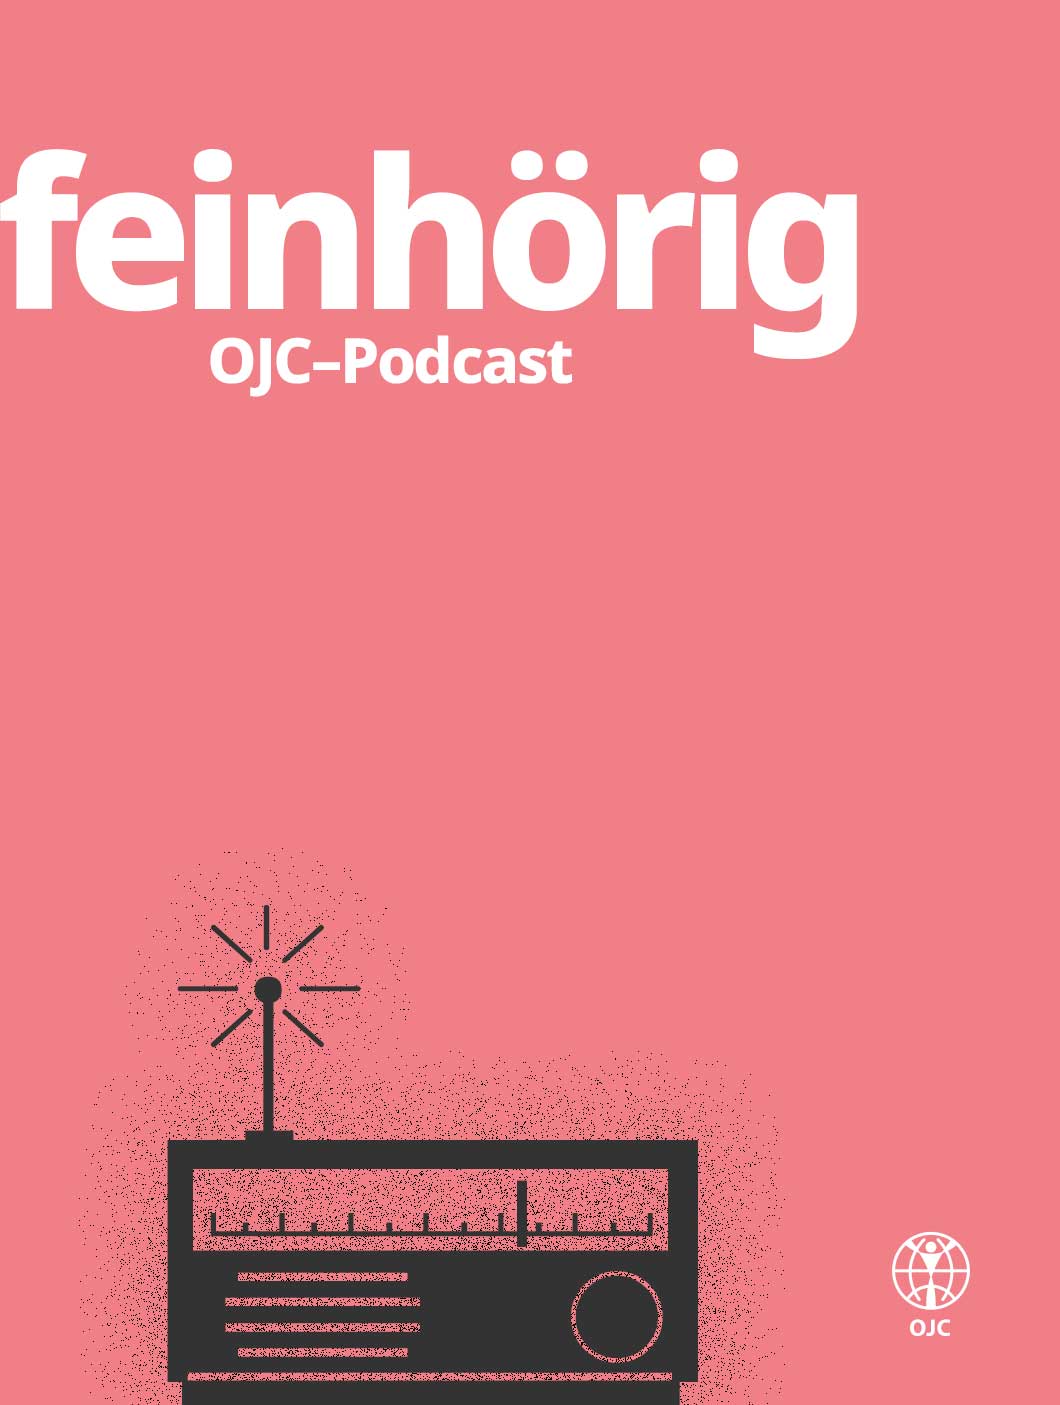 Begegnungszentrum REZ: OJC feinhoerig Banner